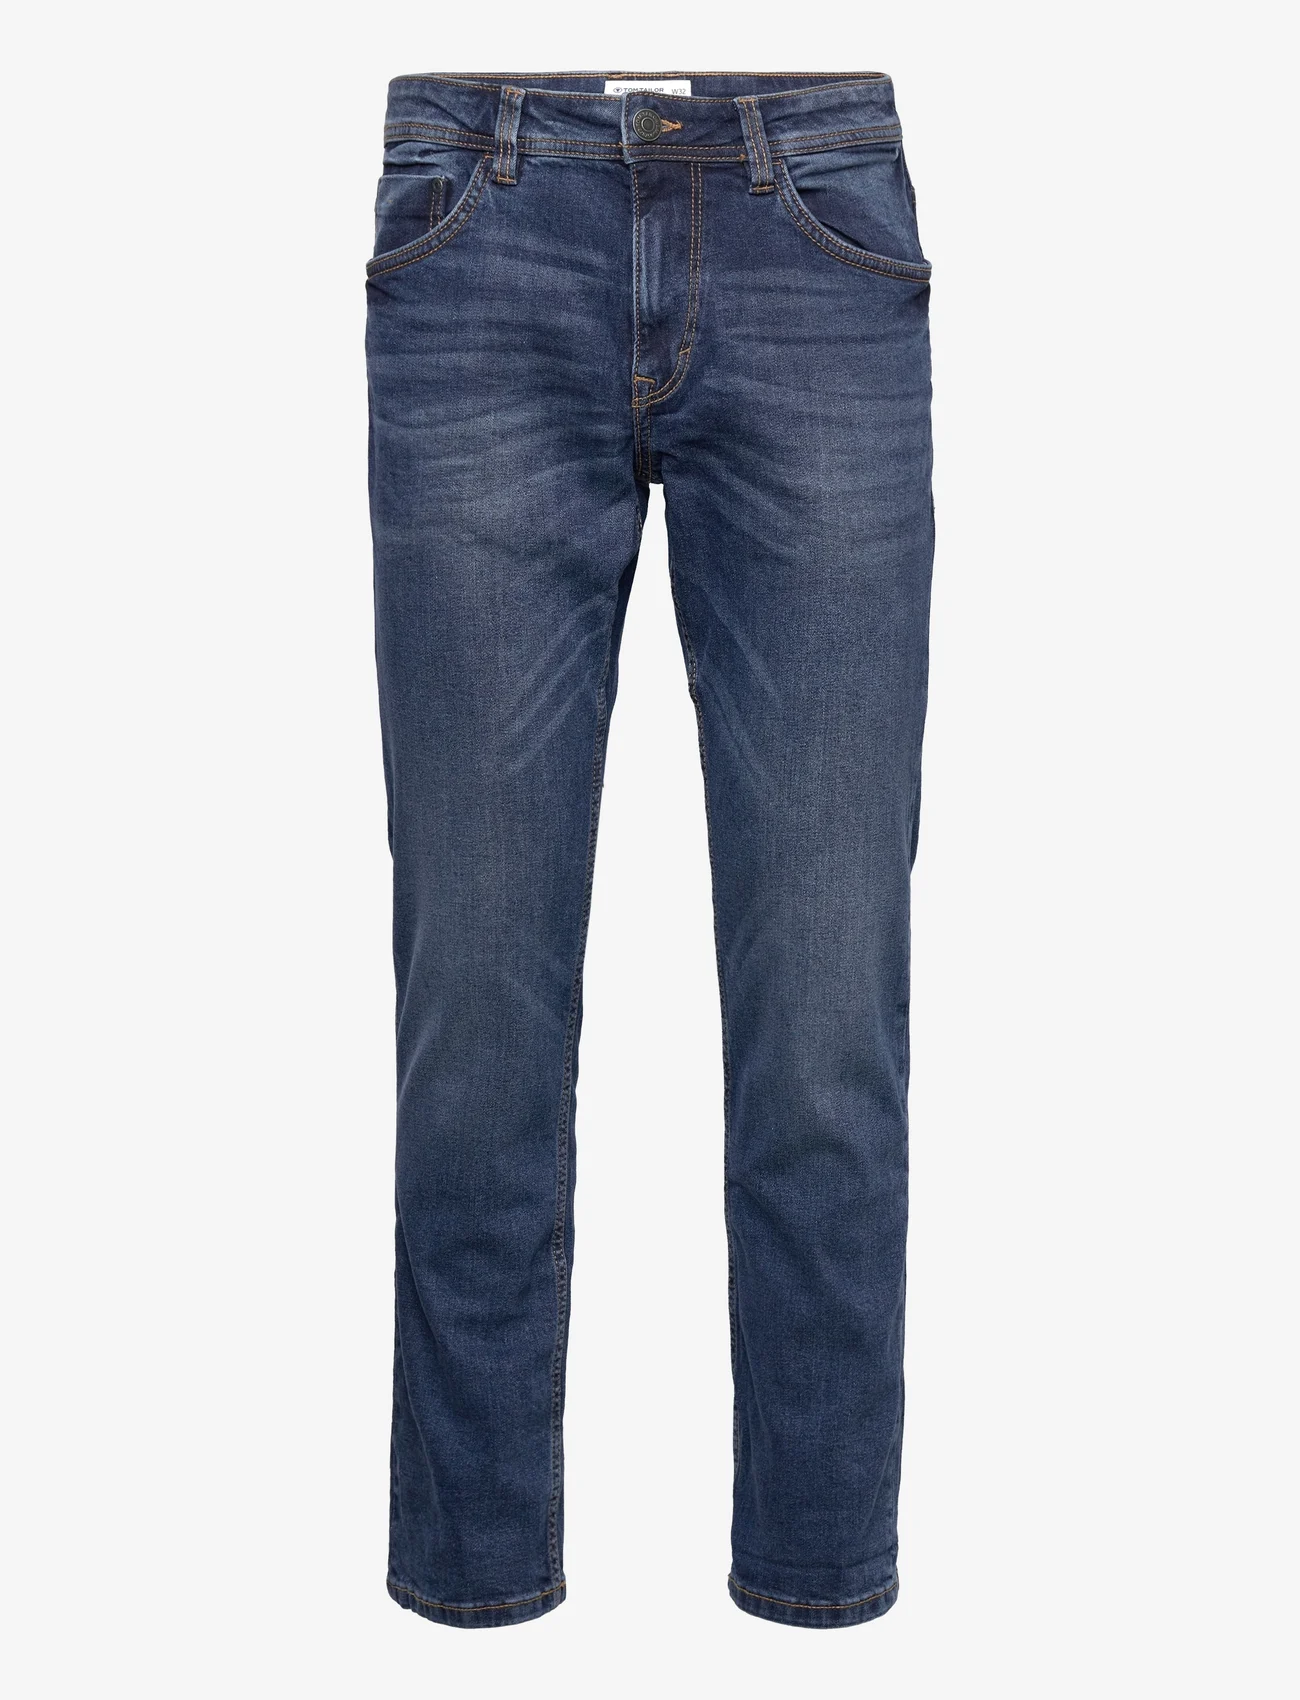 Tom Tailor - Tom Tailor Marvin - regular jeans - used mid stone blue denim - 0